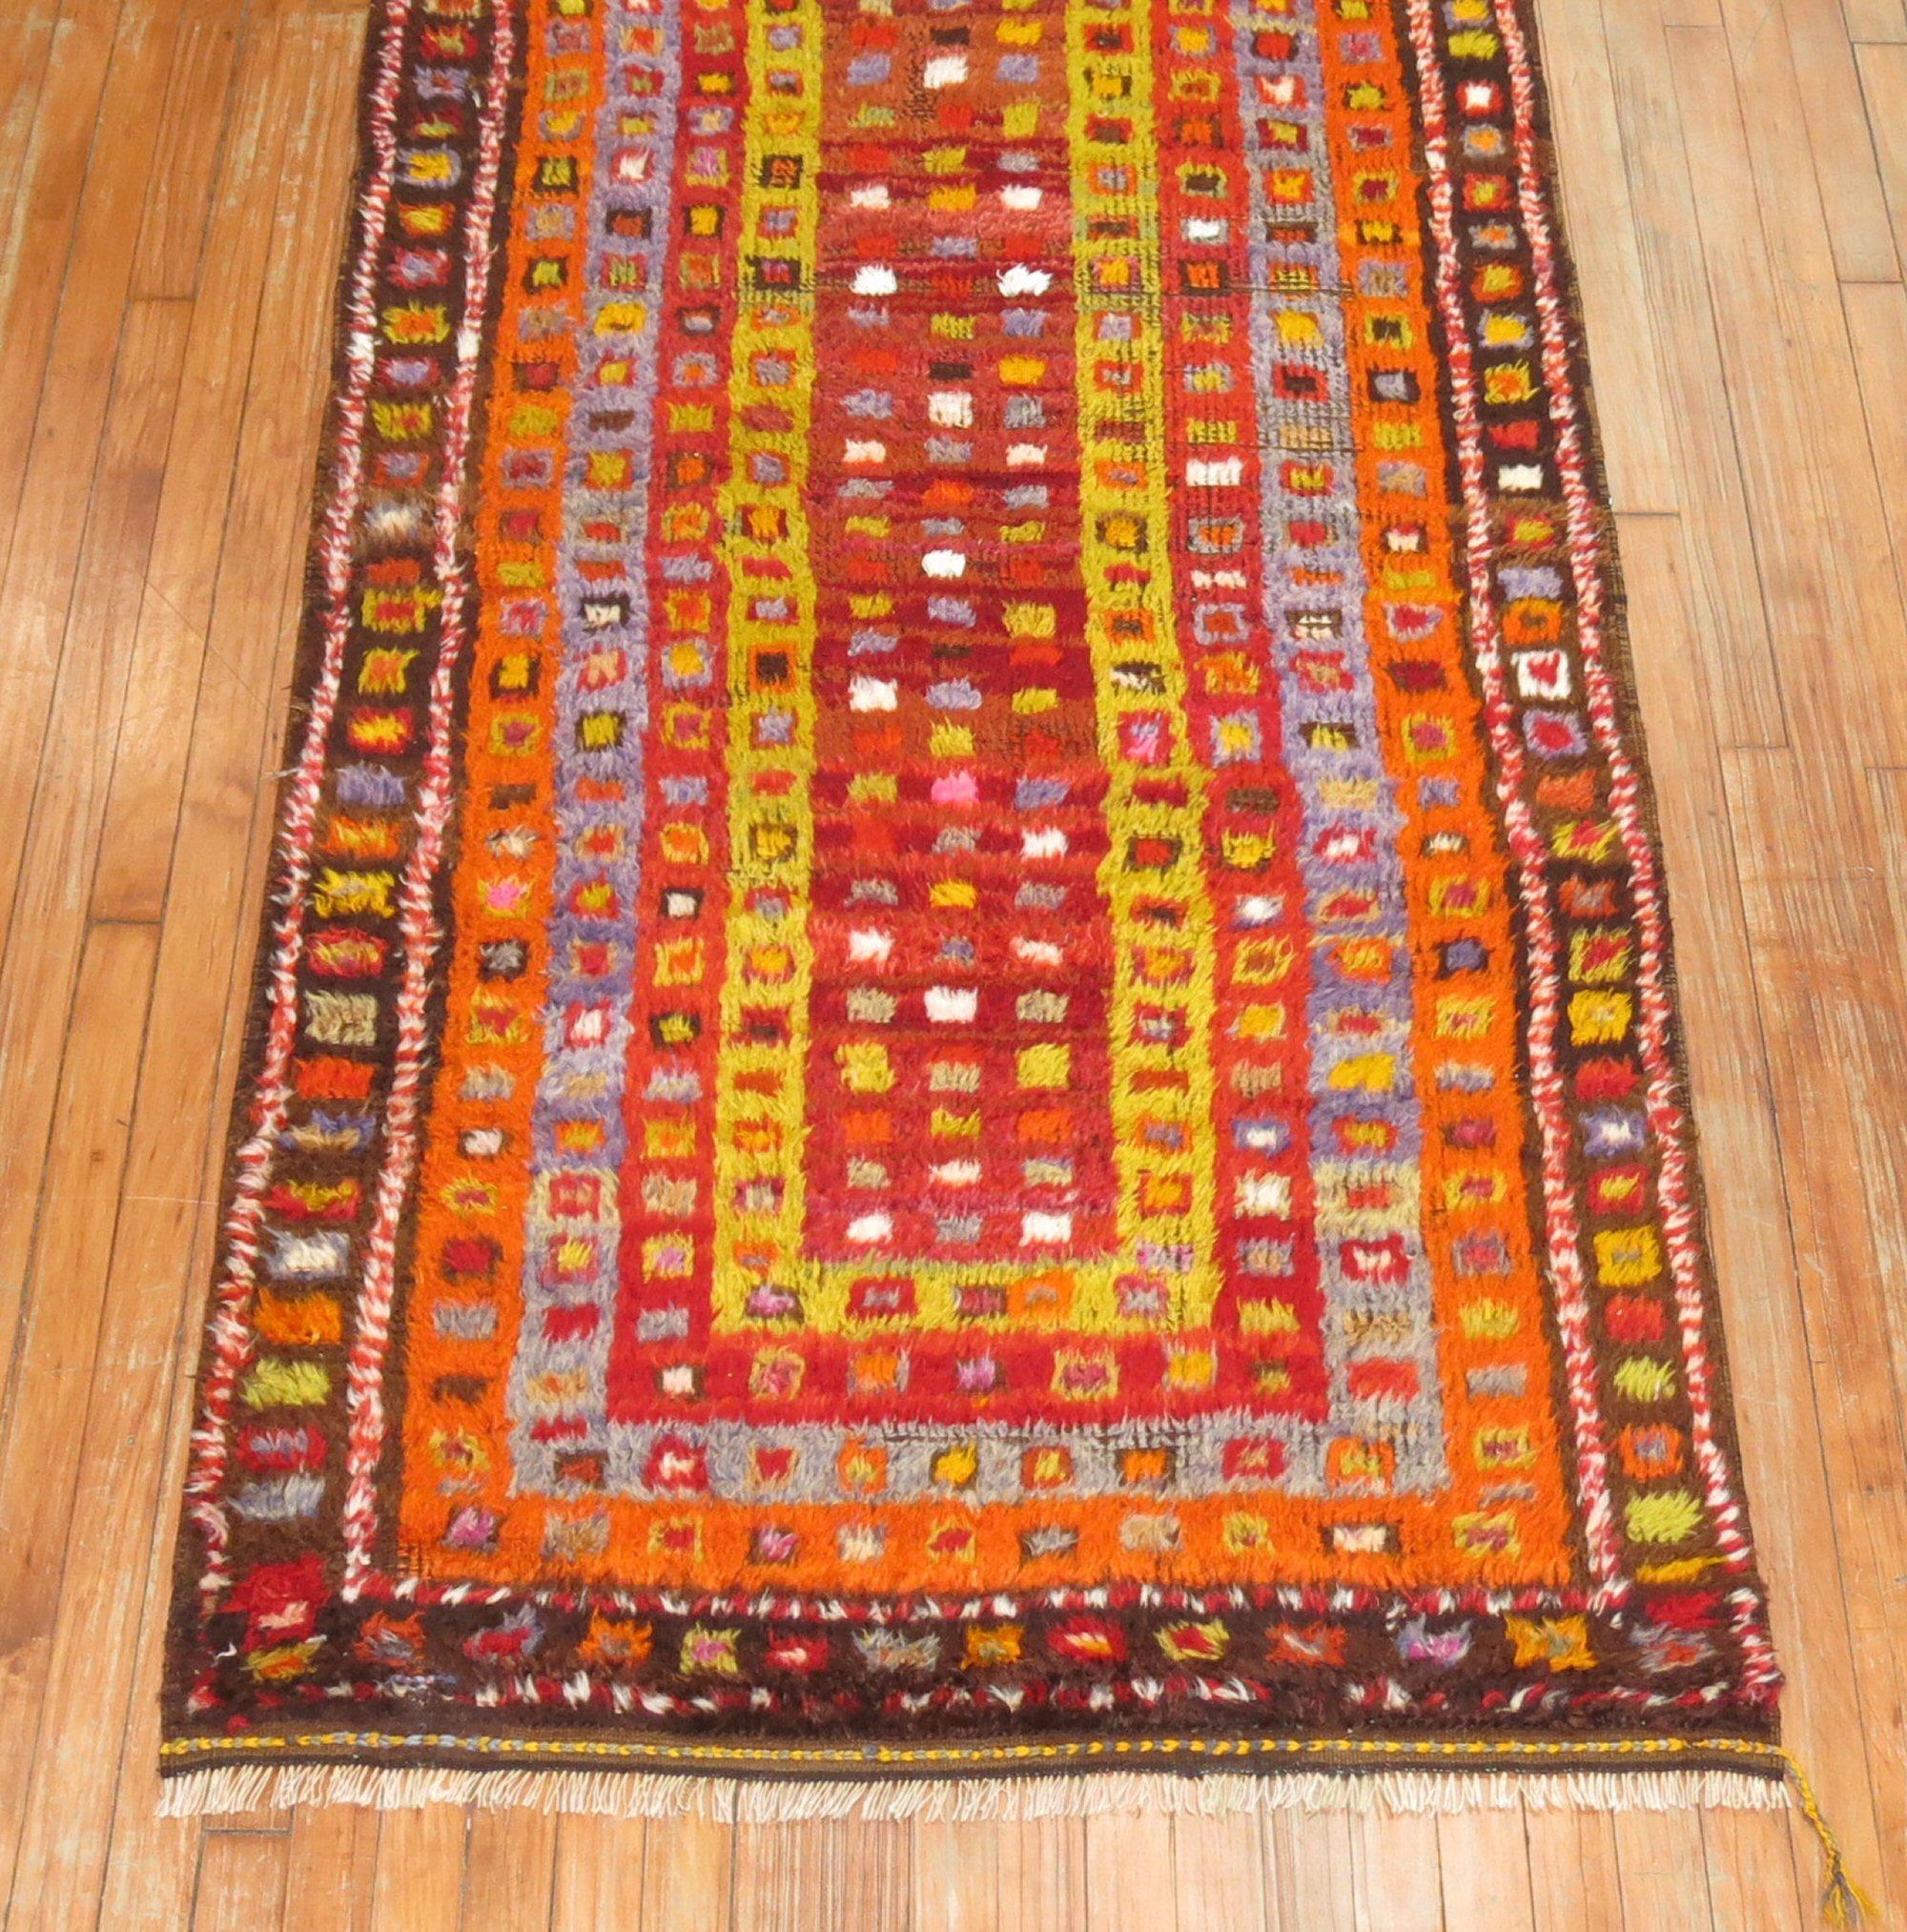 Bright colors highlight this mid-20th century vintage Turkish Tulu rug.